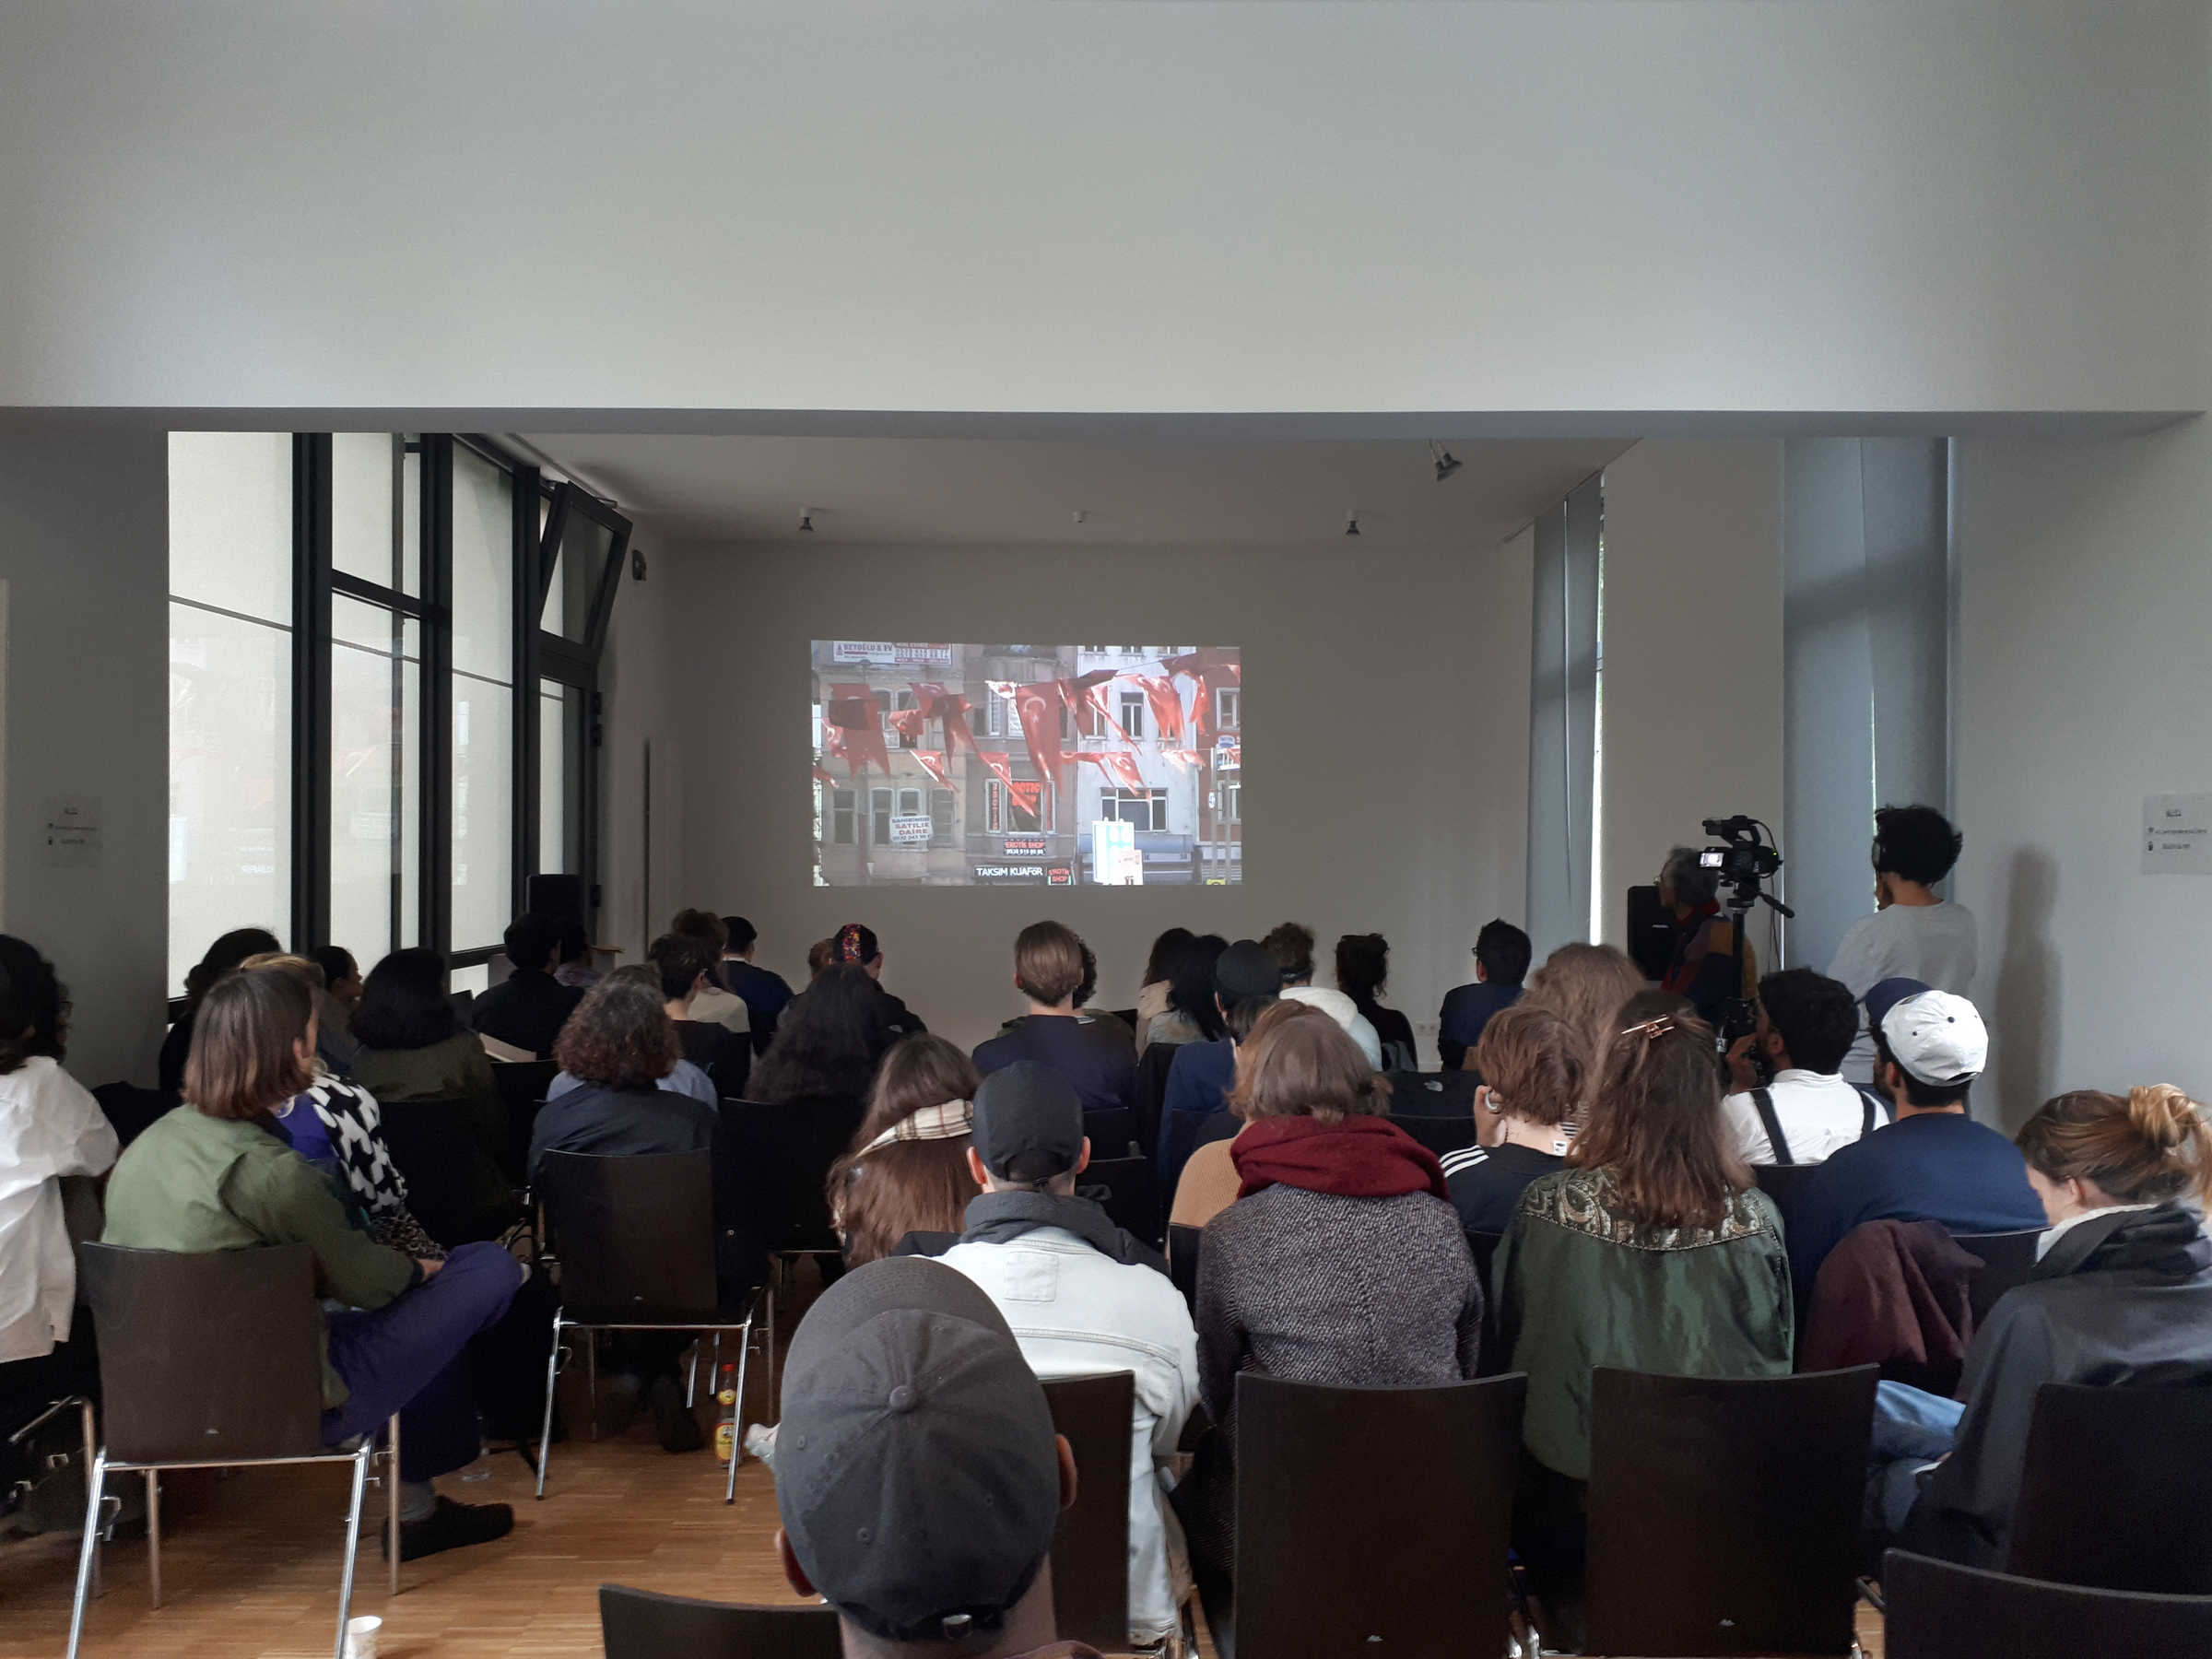 Özgür Top presenting his latest video work on Final Kitchen presentations, Silent Green, Berlin